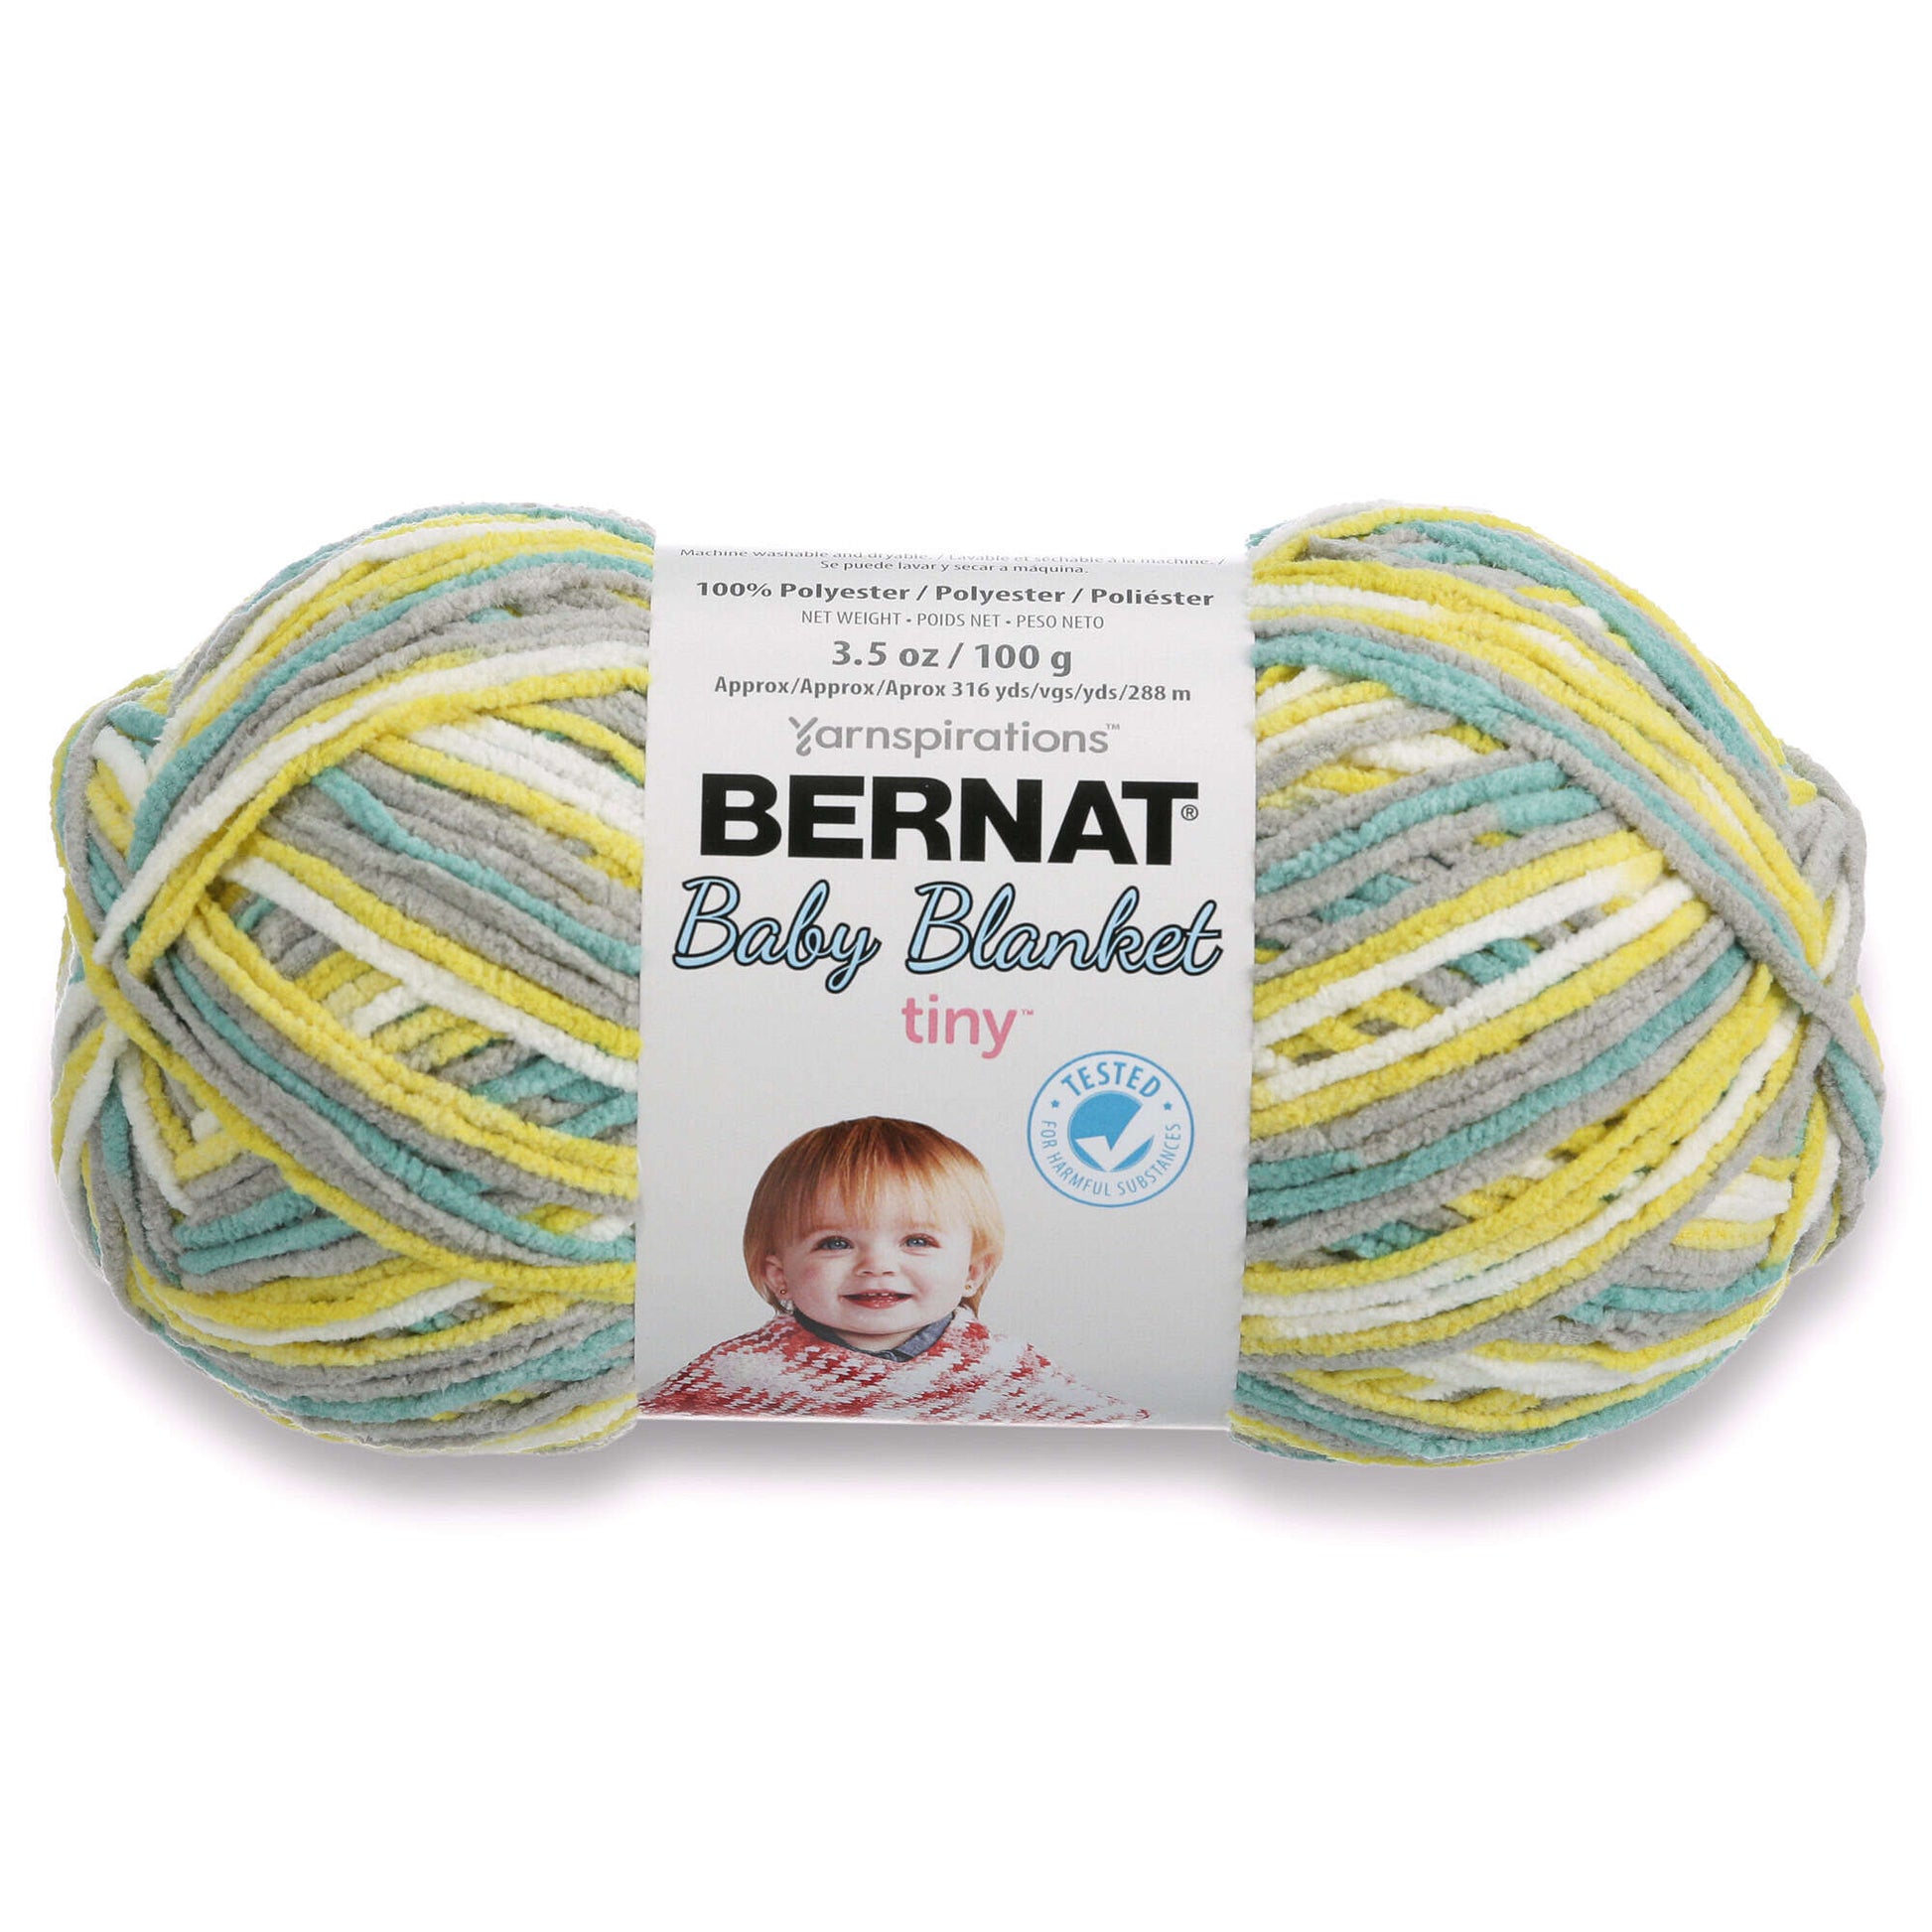 Bernat Baby Blanket Tiny Yarn - Discontinued Shades Leap Frog